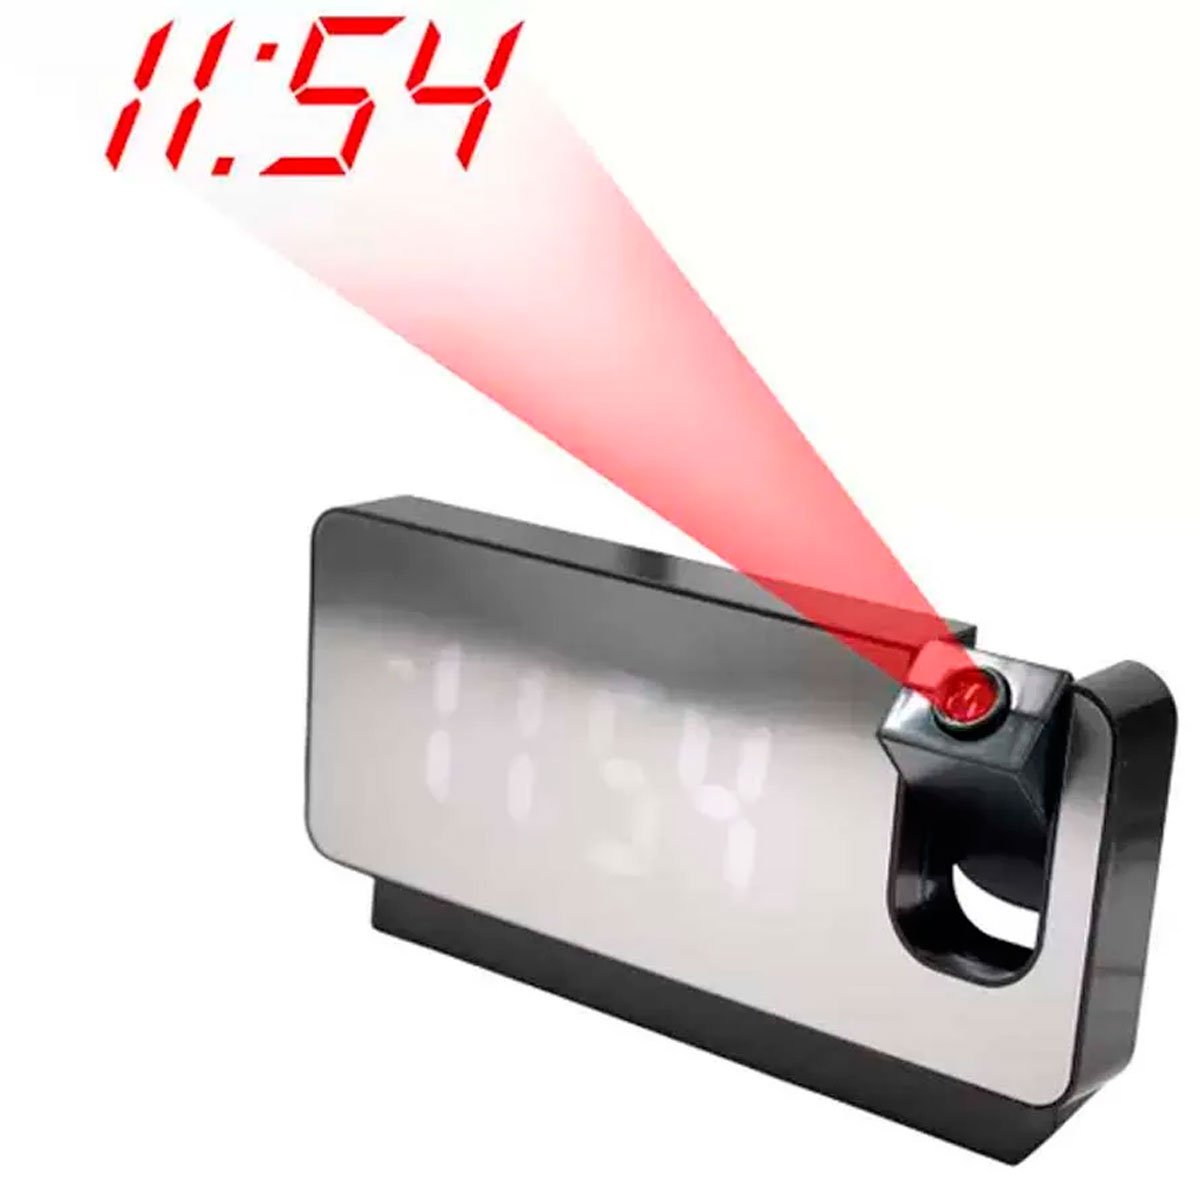 02 relogio multifuncional projetor de horas despertador alarme